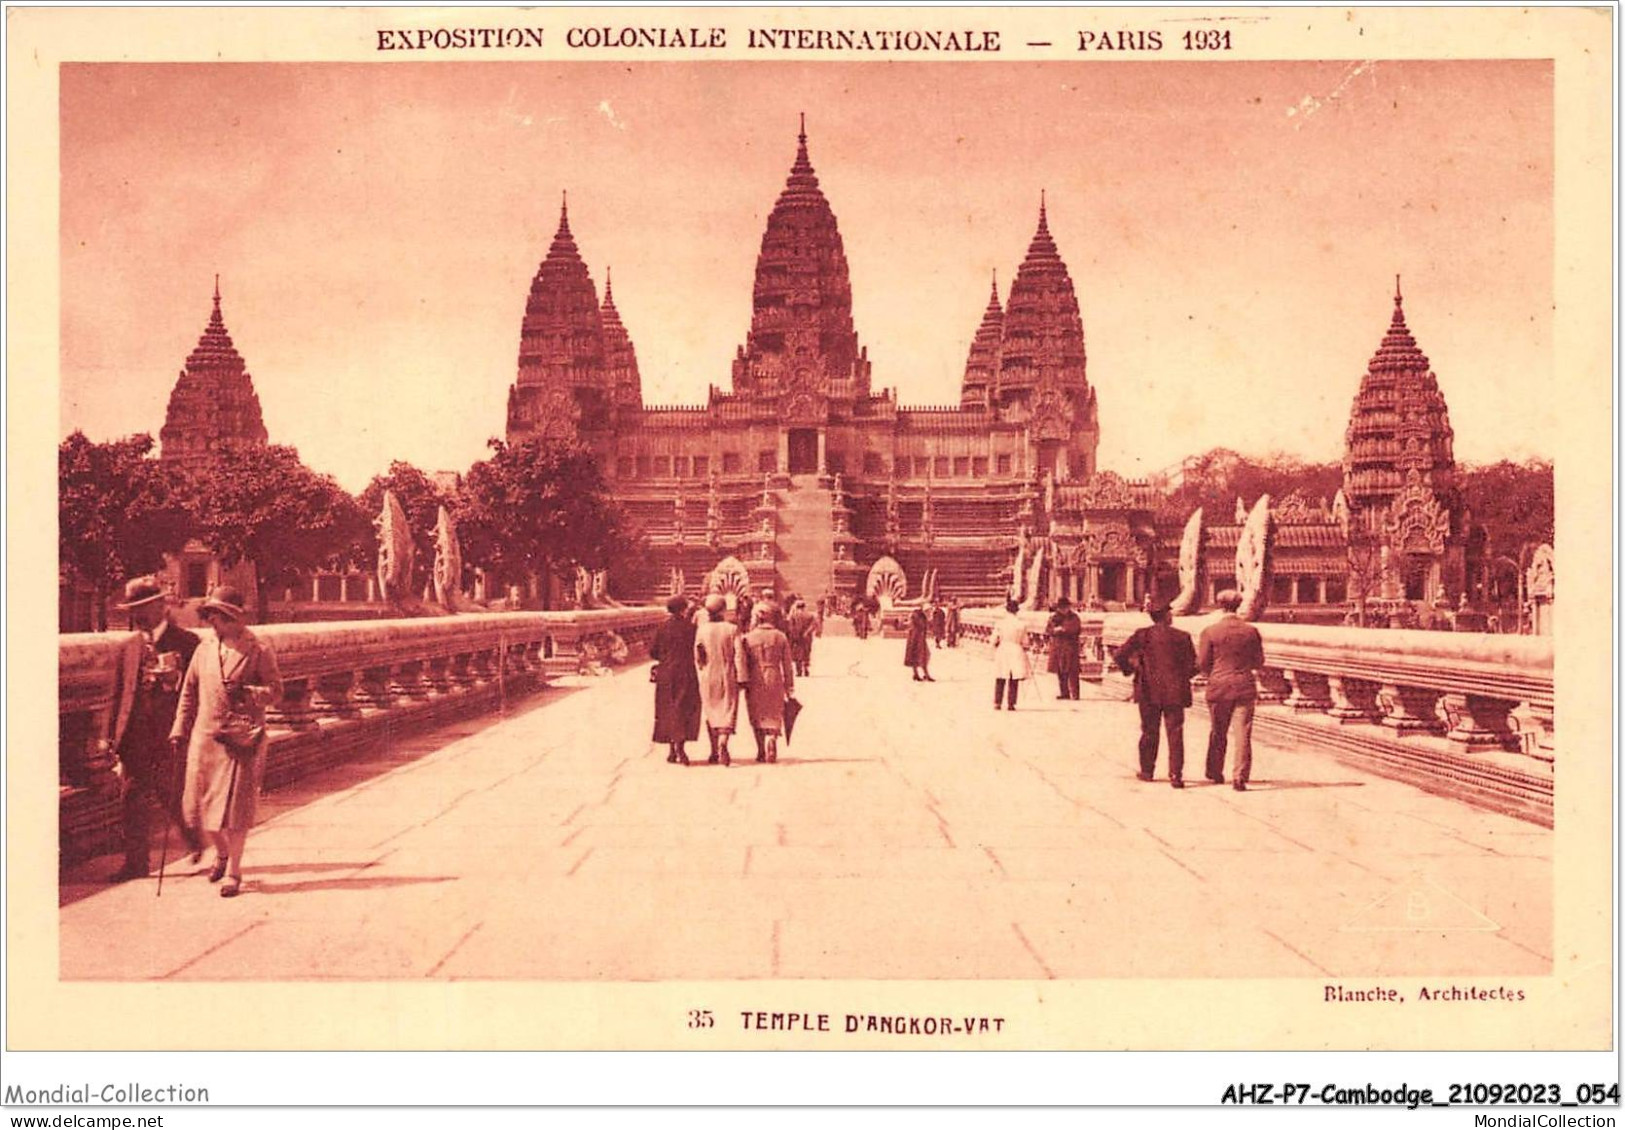 AHZP7-CAMBODGE-0623 - EXPOSITION COLONIALE INTERNATIONALE - PARIS 1931 - TEMPLE D'ANGKOR-VAT - Cambodia